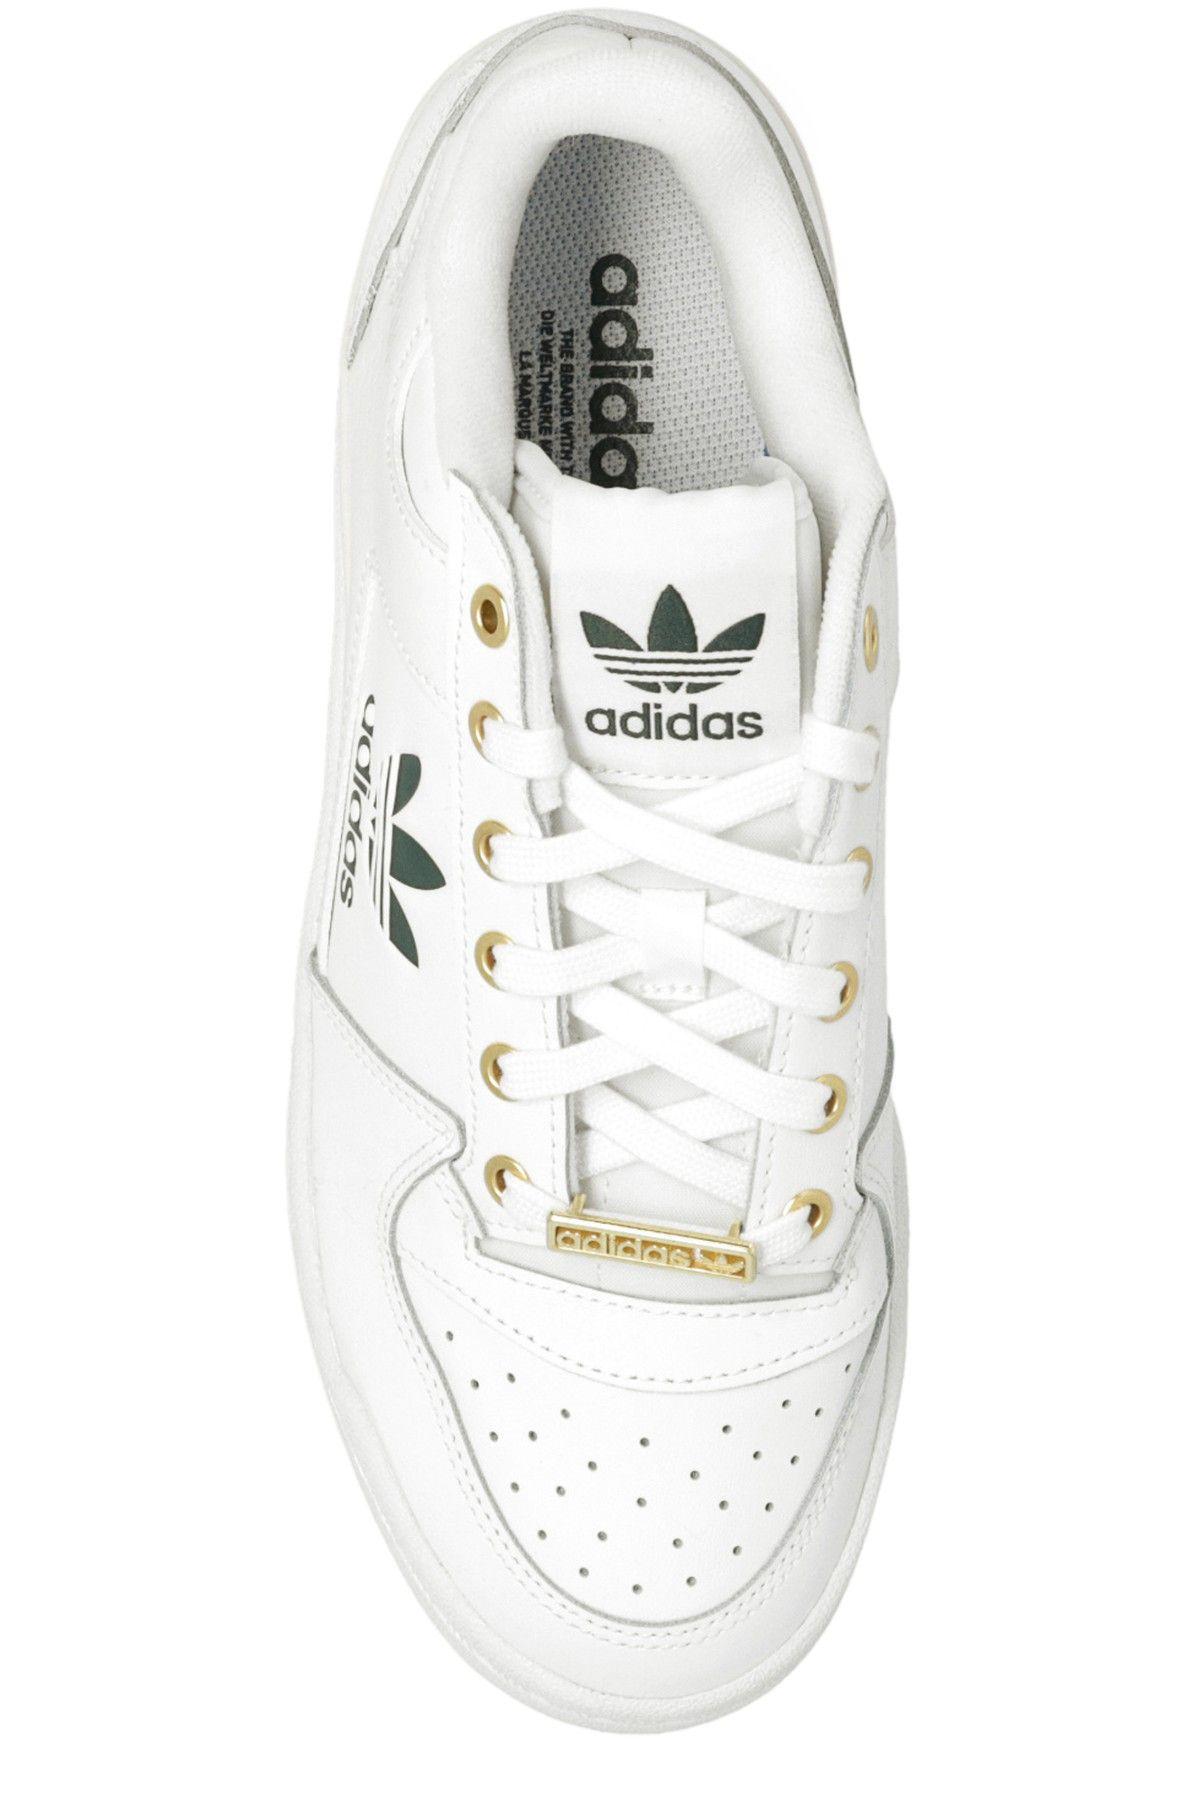 adidas Originals Forum Bold Sneakers in White | Lyst